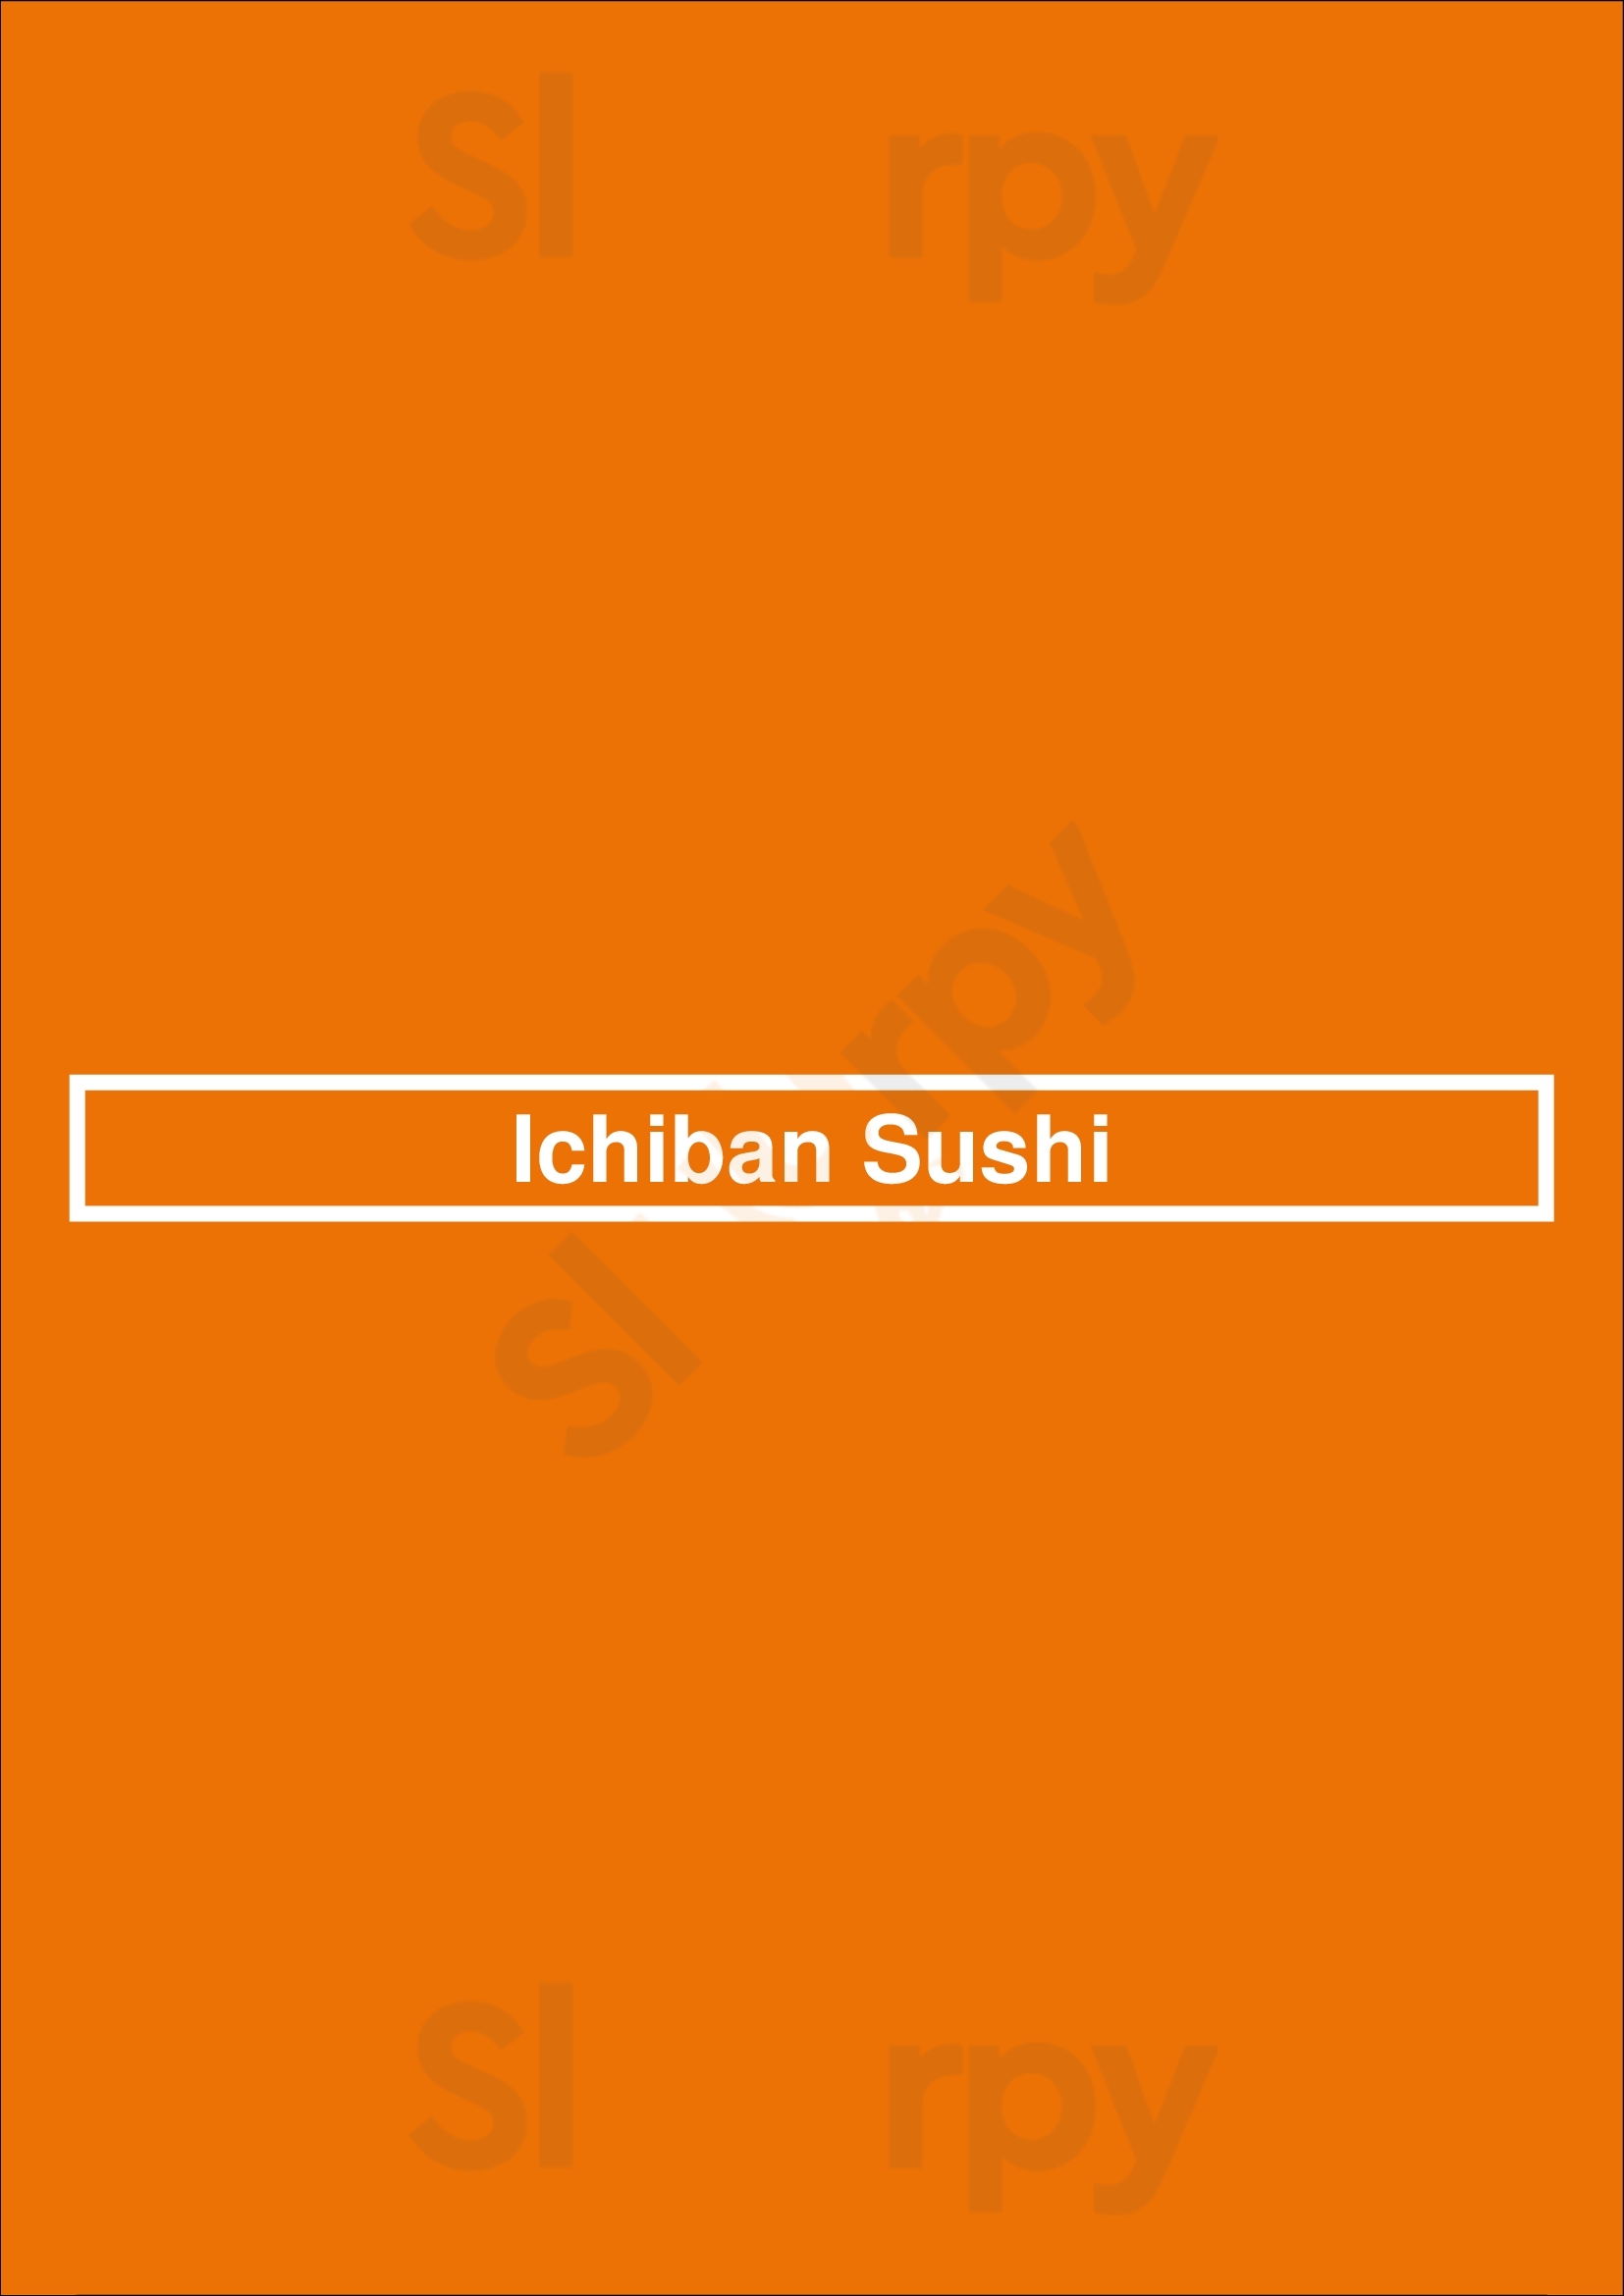 Ichiban Sushi Bakersfield Menu - 1